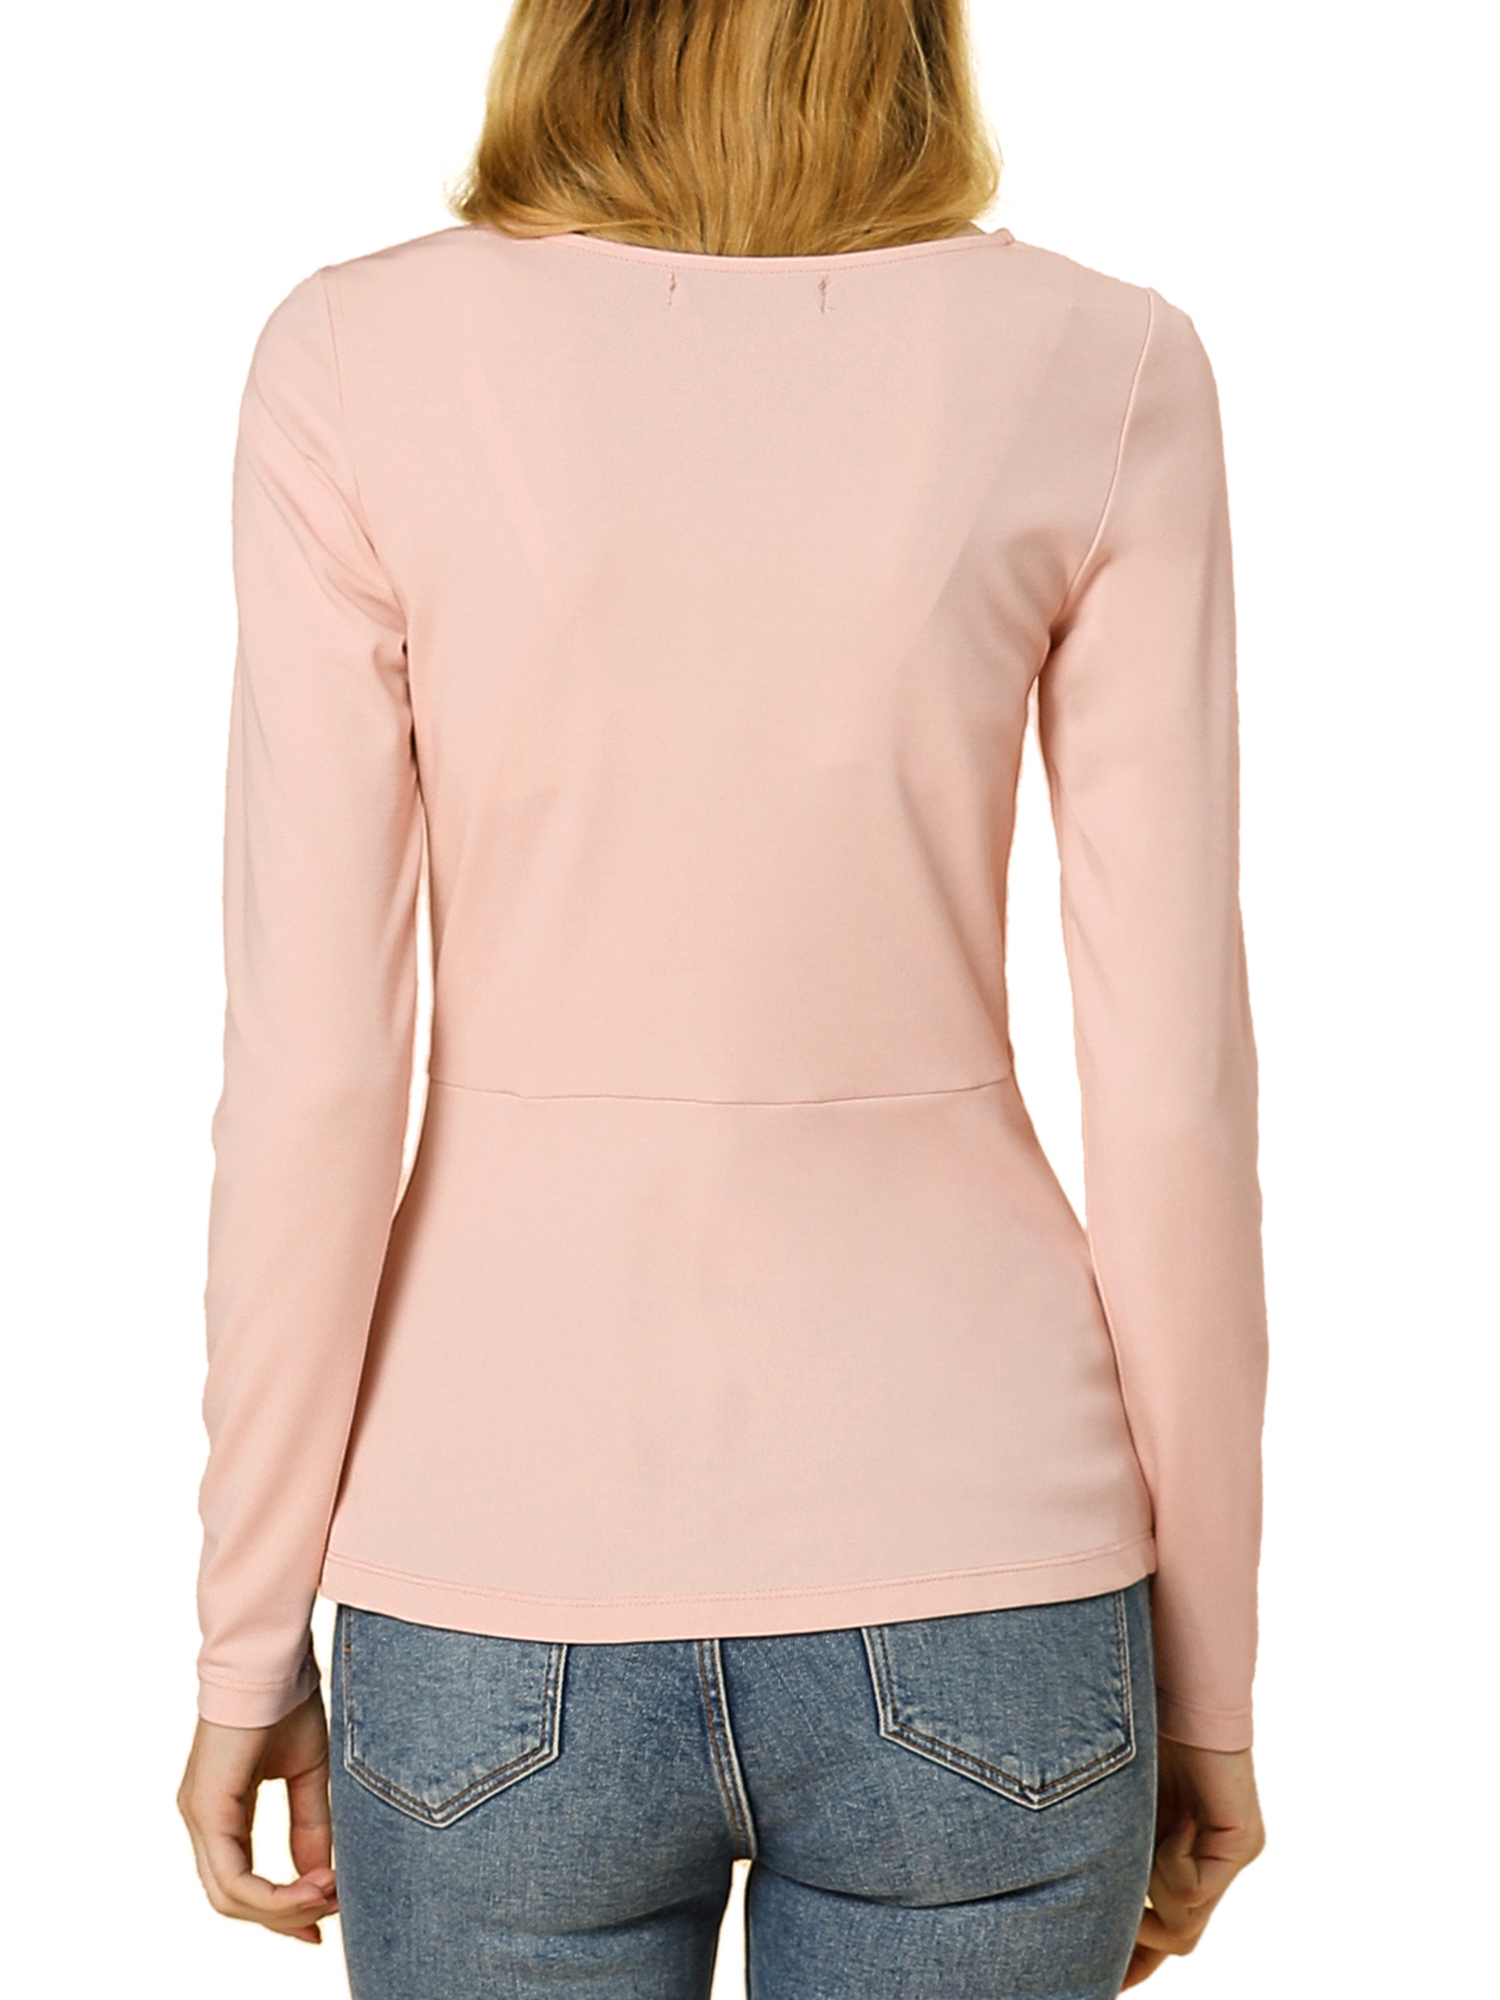 MODA NOVA Junior's Round Neck Tops Long Sleeve Blouse Shirt Pink M - image 3 of 6